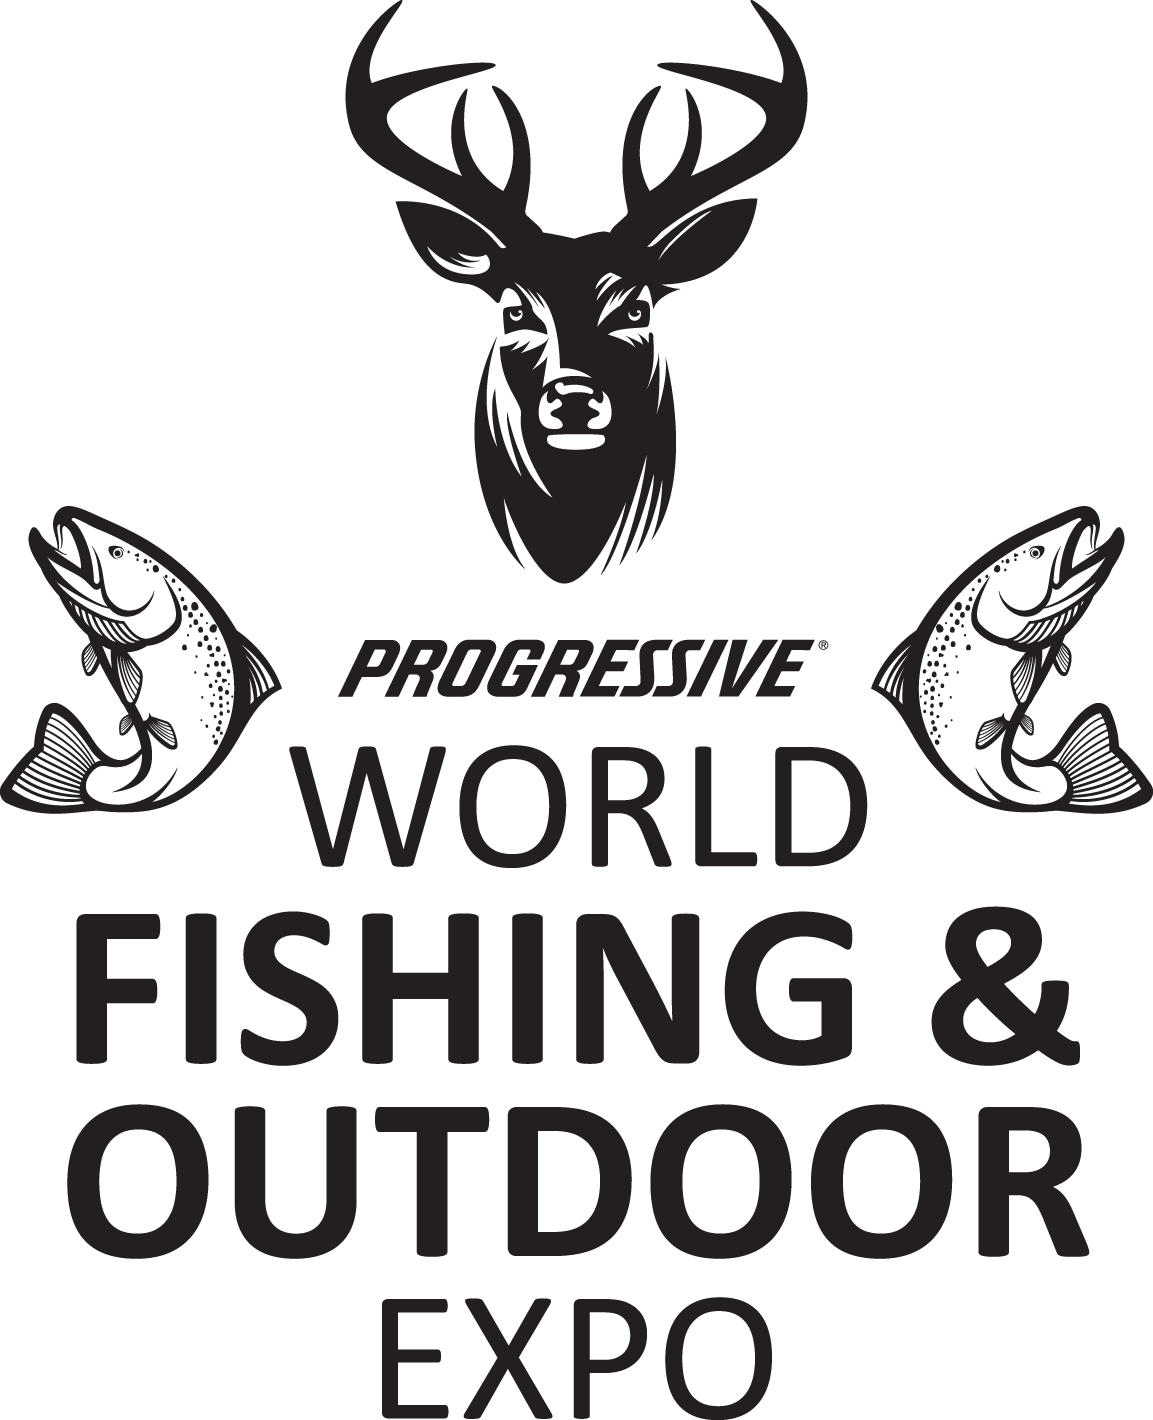 Progressive® Insurance World Fishing & Outdoor Exposition